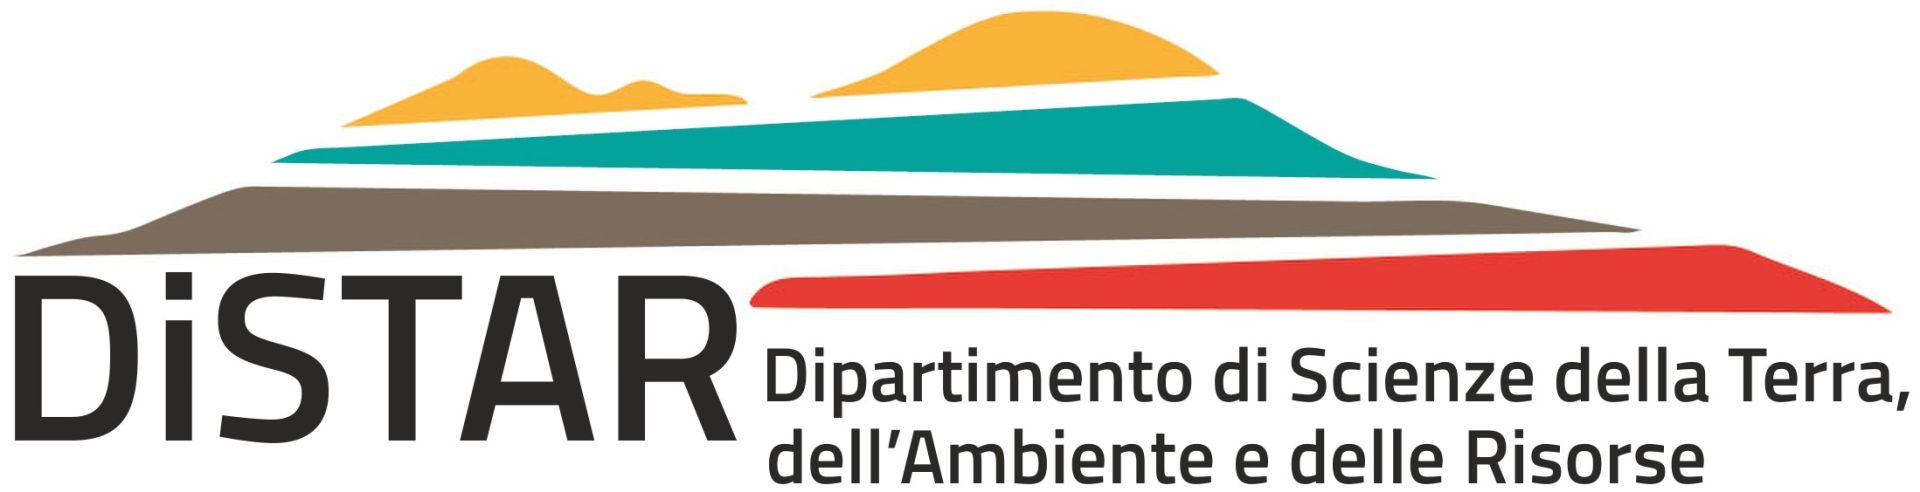 Avviso seminario DISTAR  -  The Apulian Platform beneath the Apennines: past, present, future